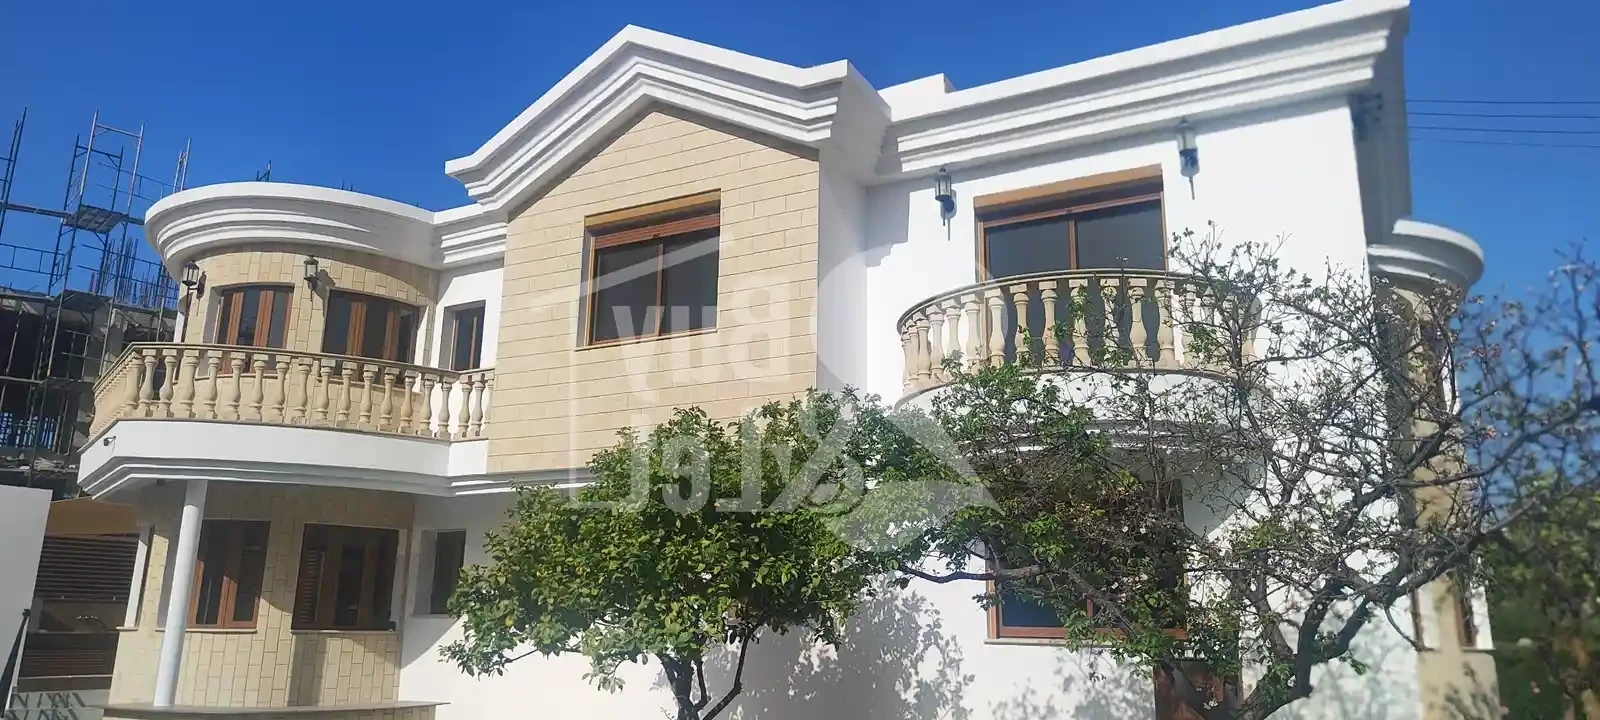 6-bedroom villa fоr sаle €1.980.000, image 1